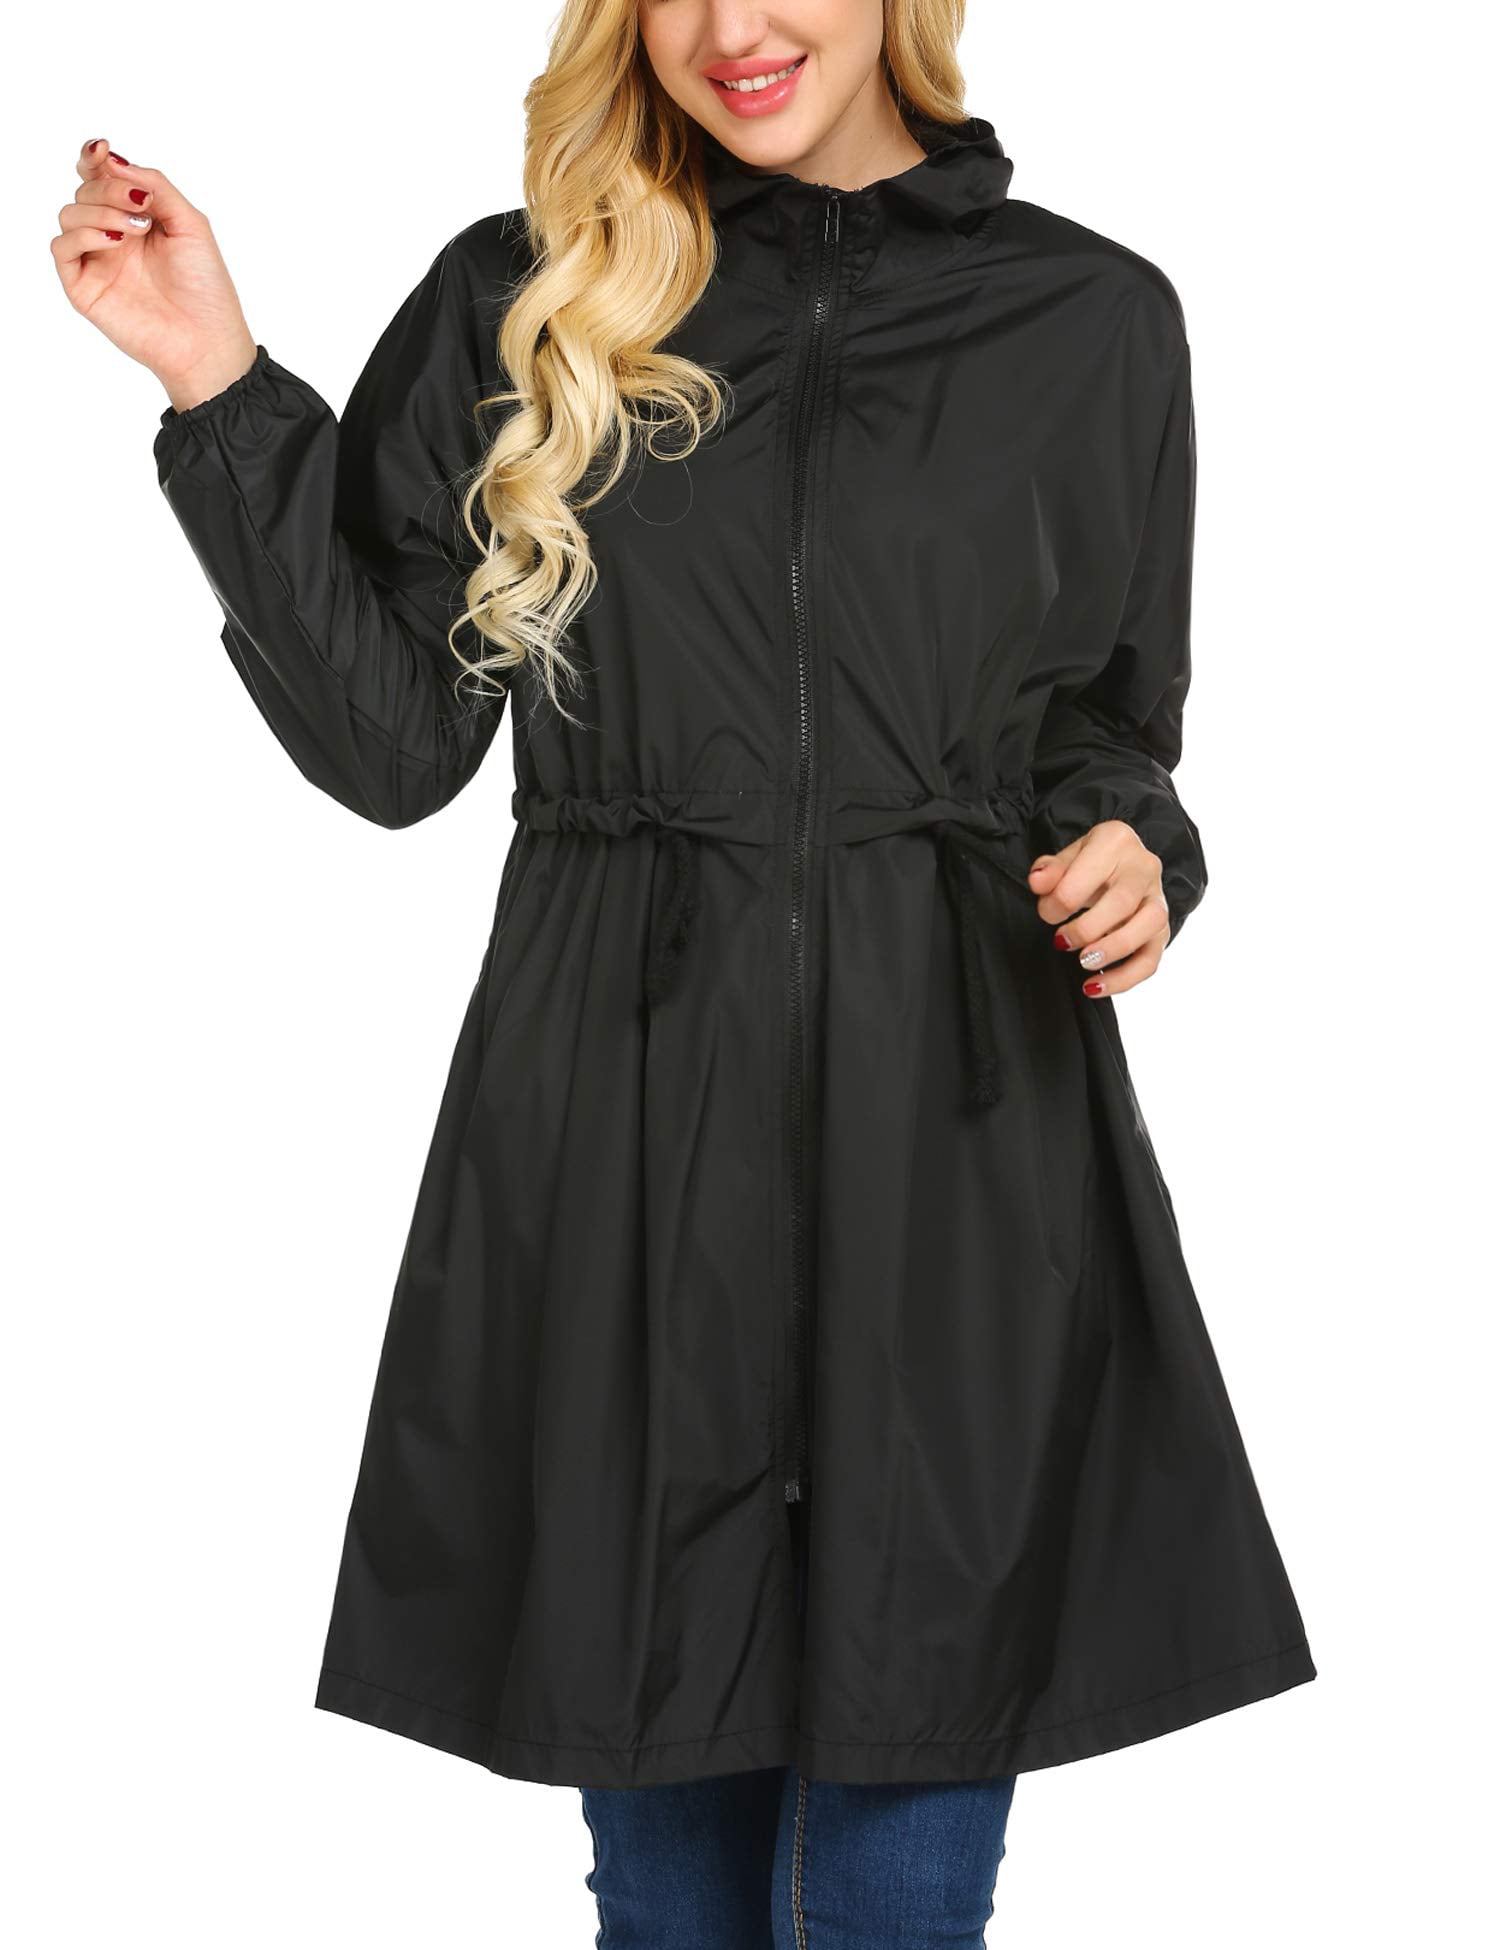 ANGVNS - Women Jacket Large Lightweight Waterproof Hooded Raincoat L